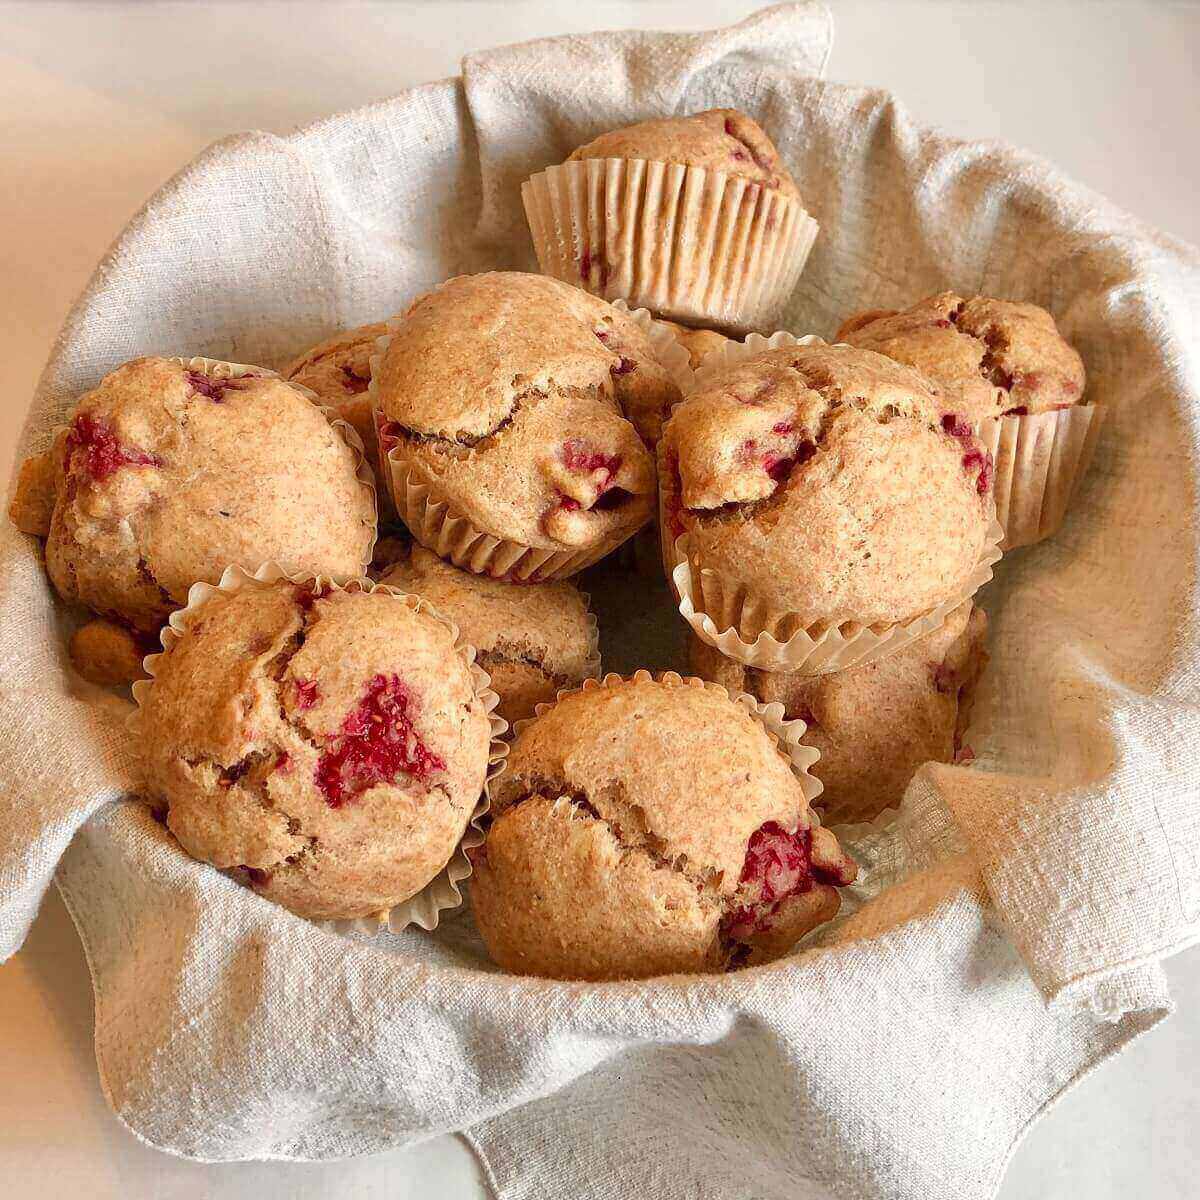 Vegan raspberry muffins piled in a basket.